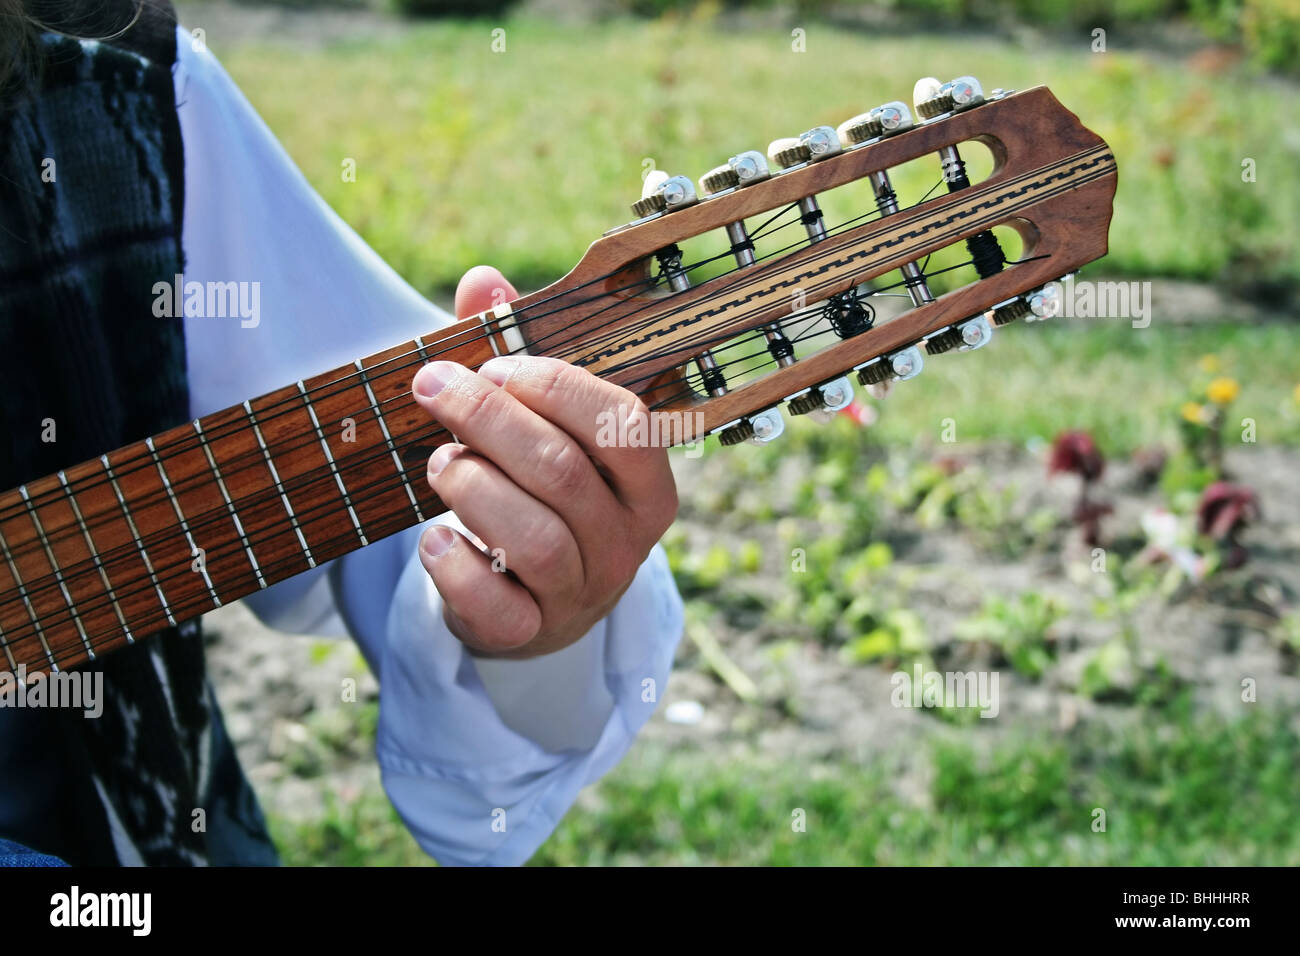 Bolivianische 10-saitige Gitarre, Charango genannt Stockfotografie - Alamy